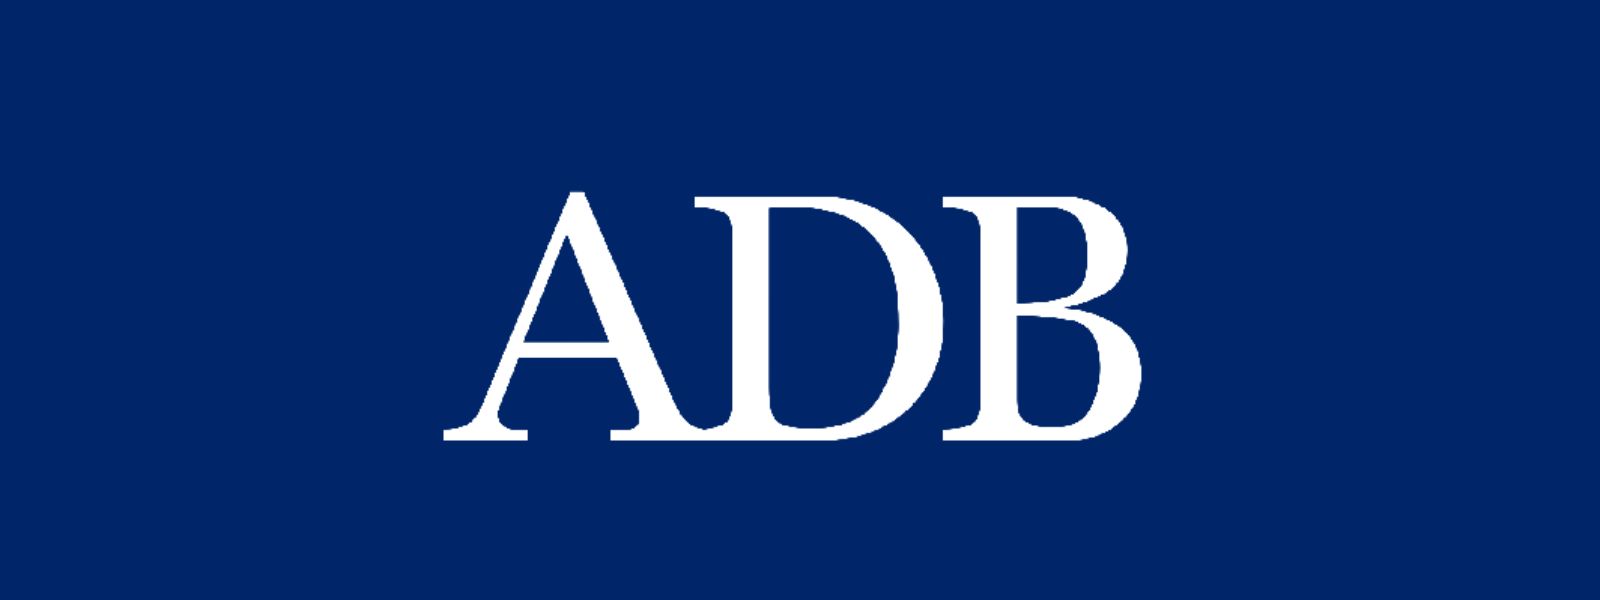 ADB Provides Sri Lanka Access to Concessional Financing